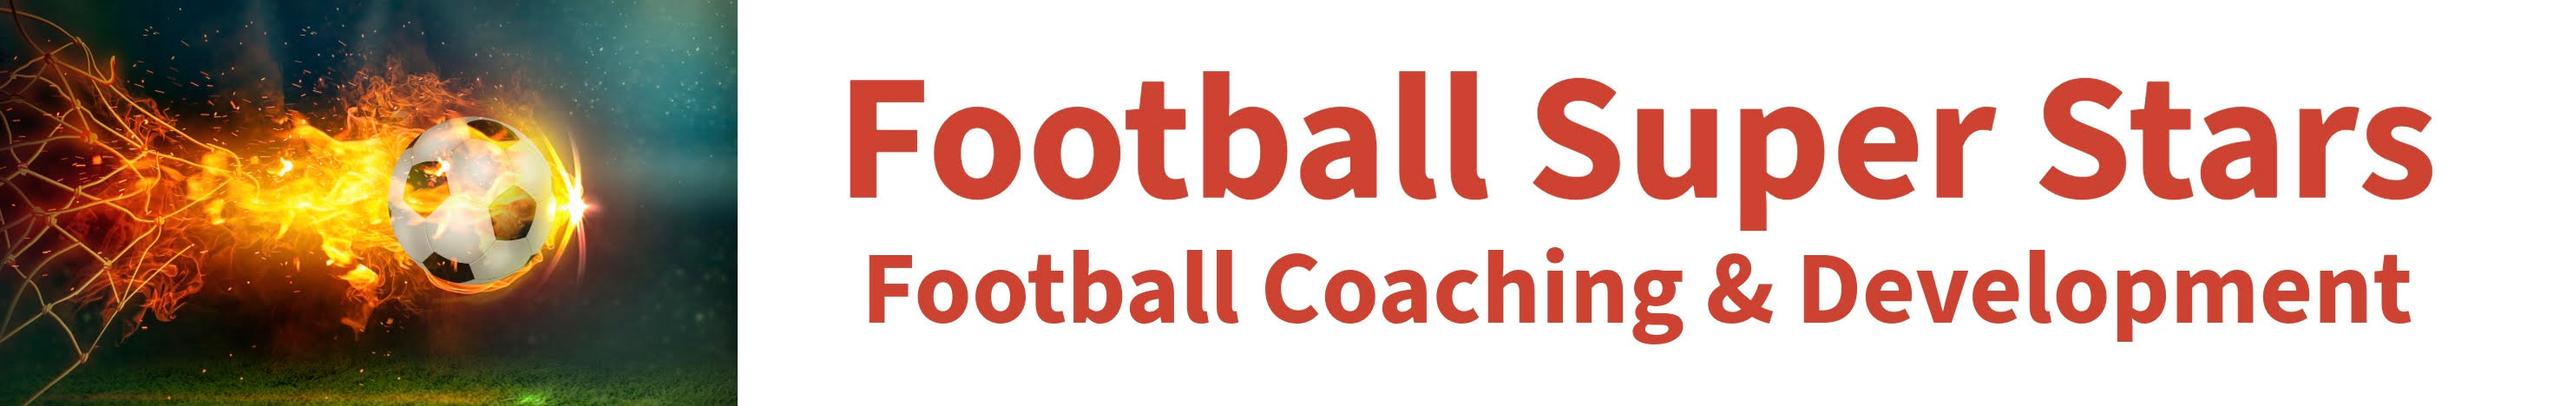 Football Super Stars - Football Coaching & Development